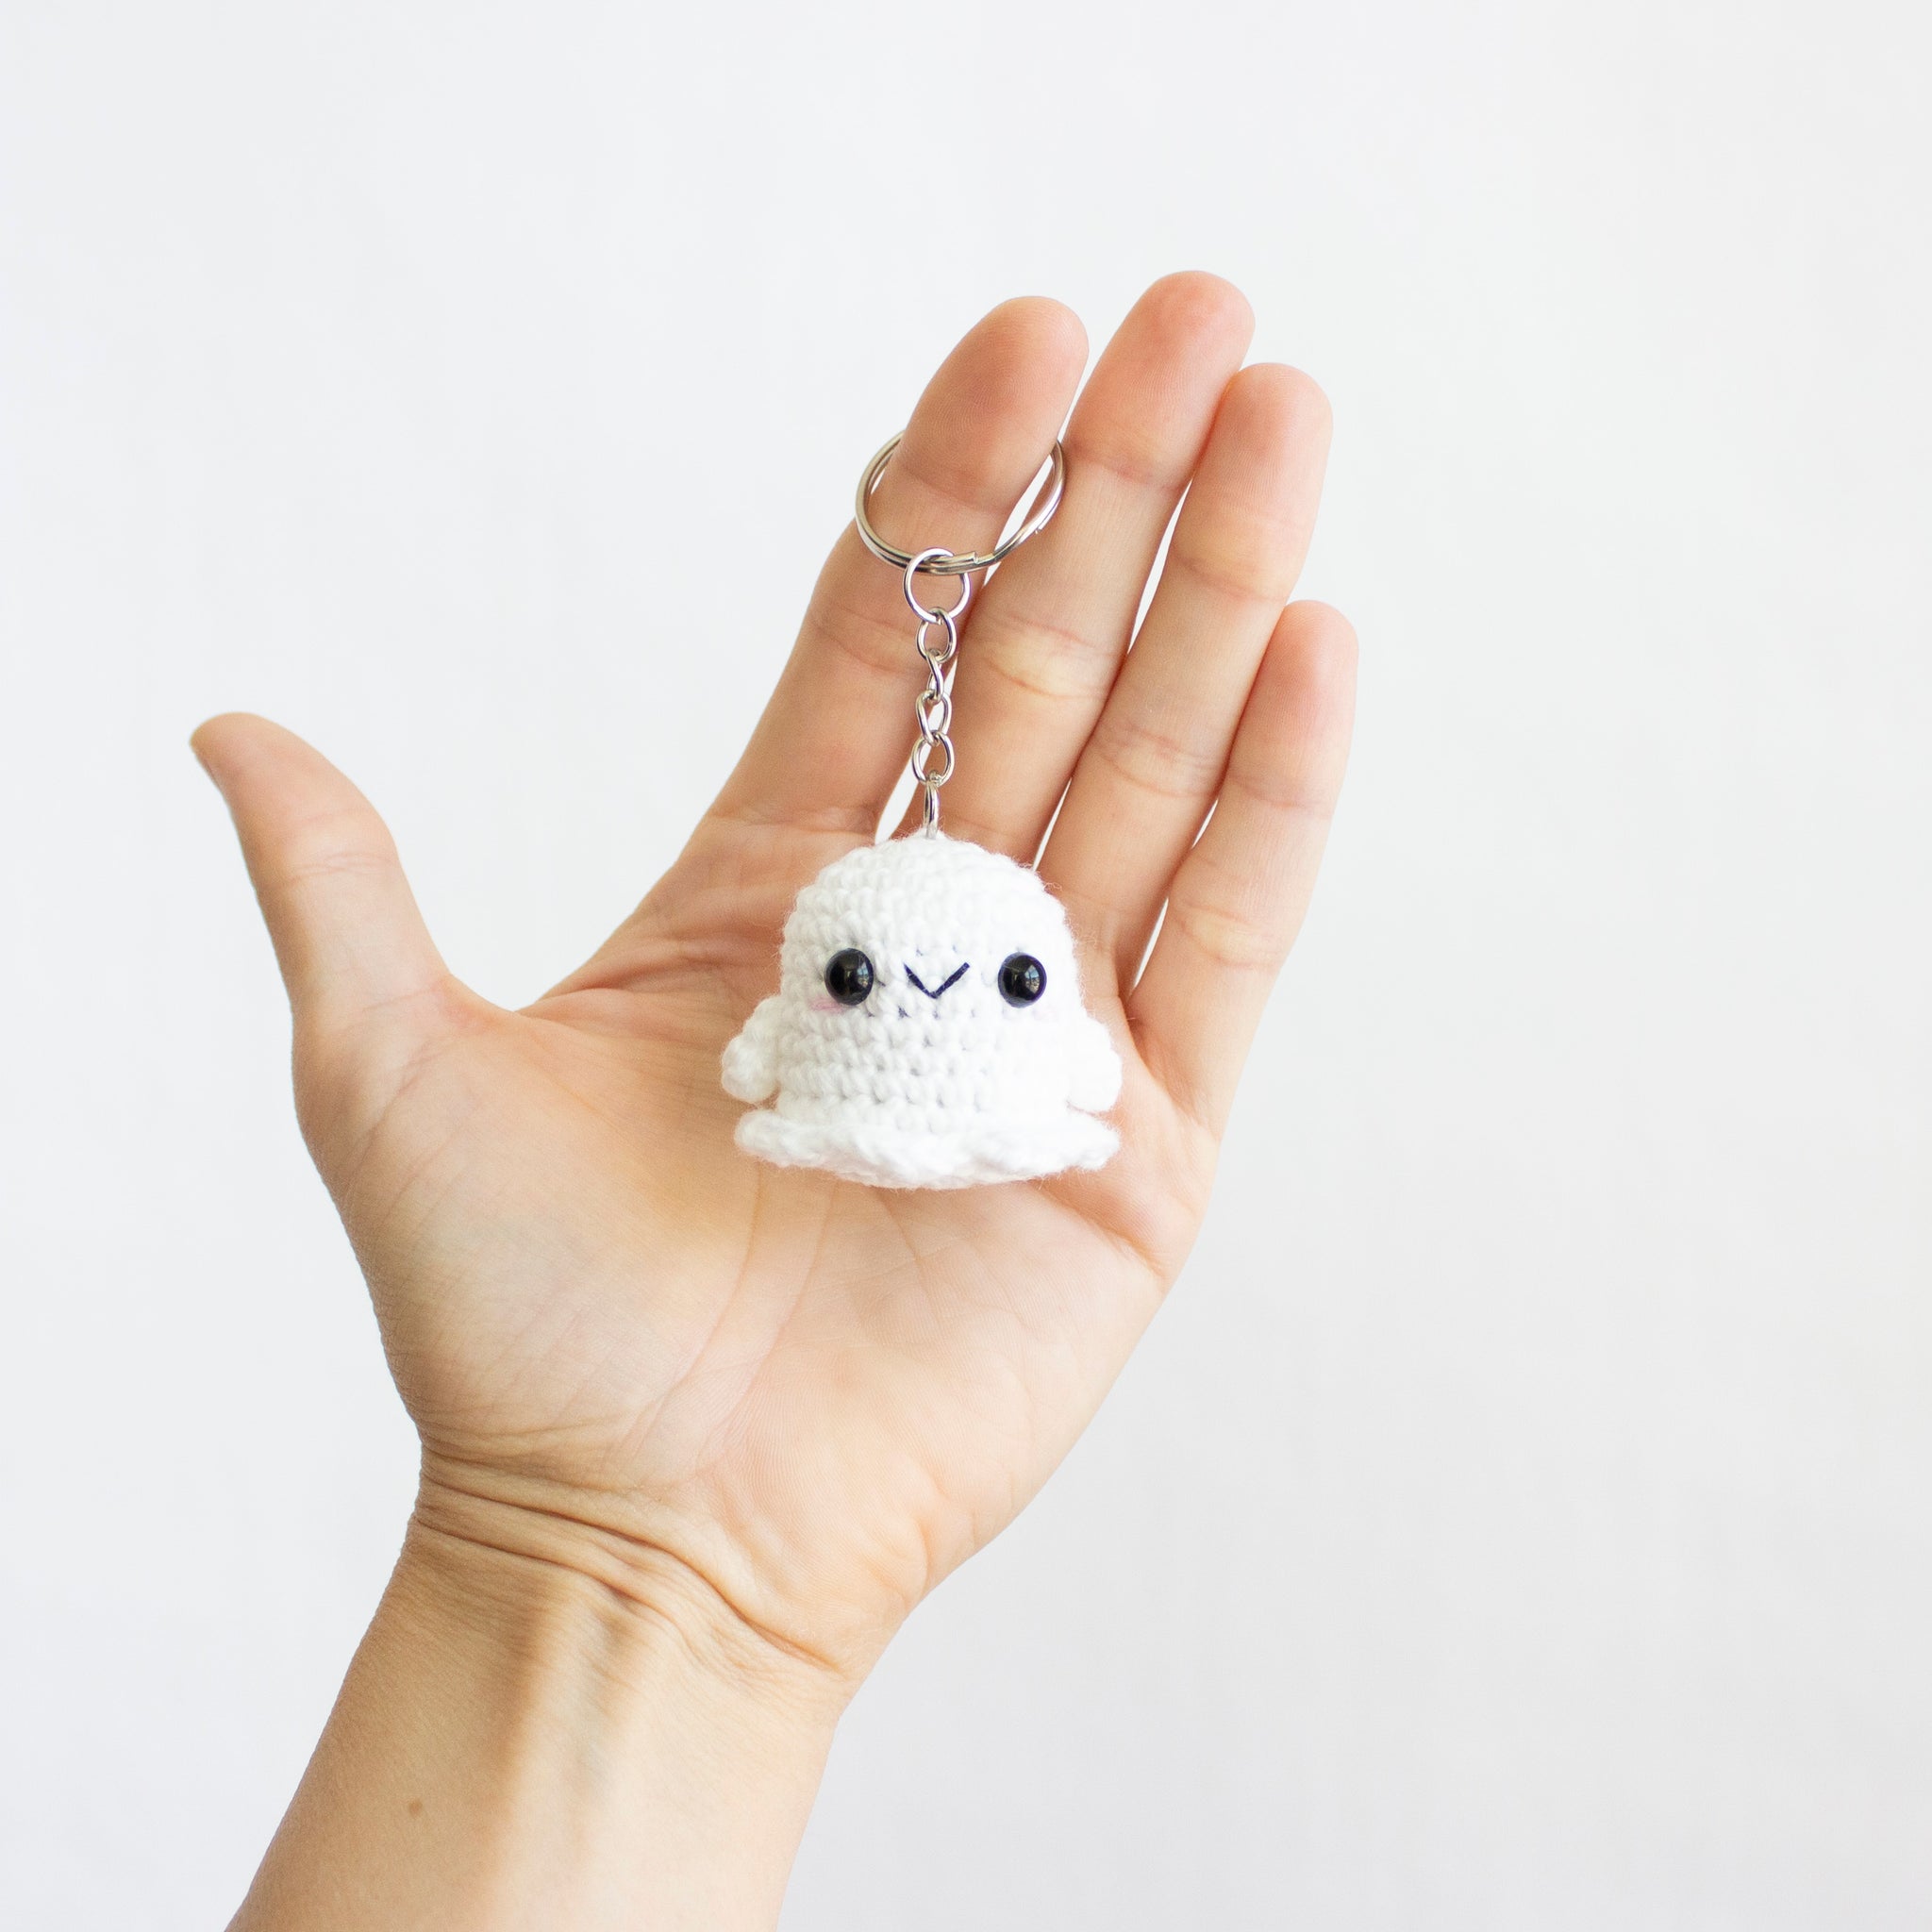 Halloween Crochet Keychains - Extra Mini Amigurumi Ghost Pattern